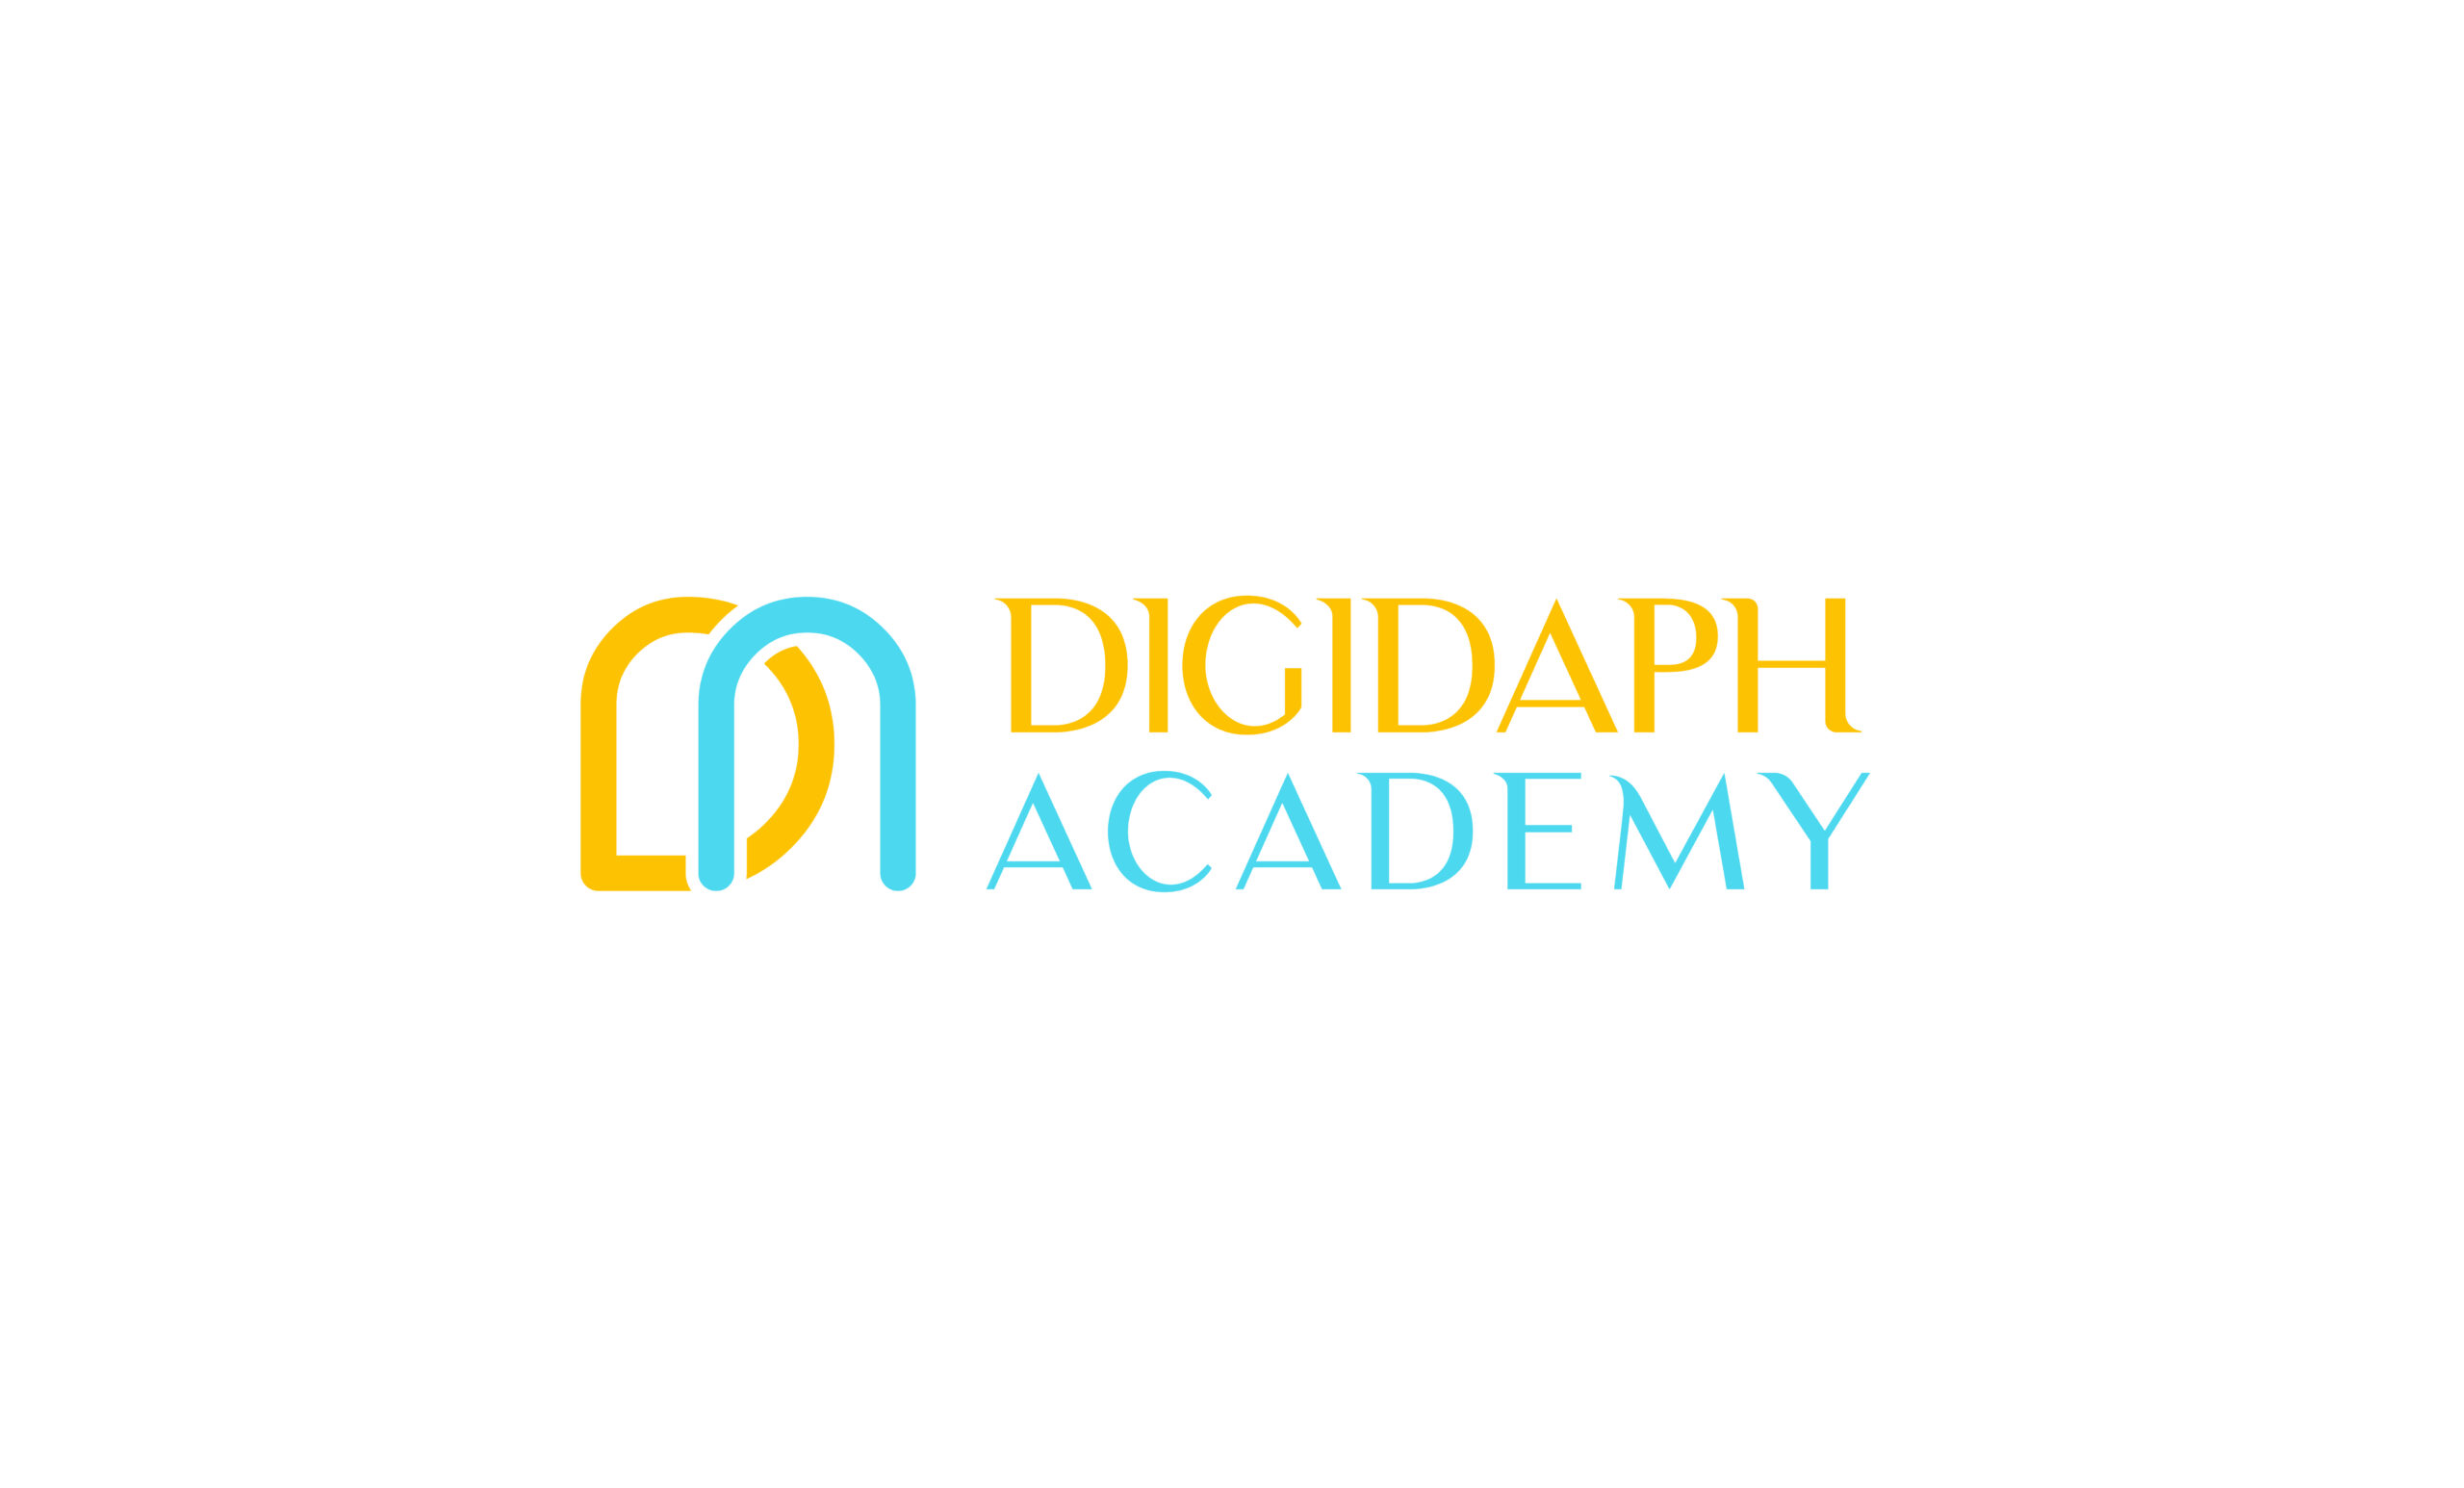 Digidaph Academy coloring logo white bg-01